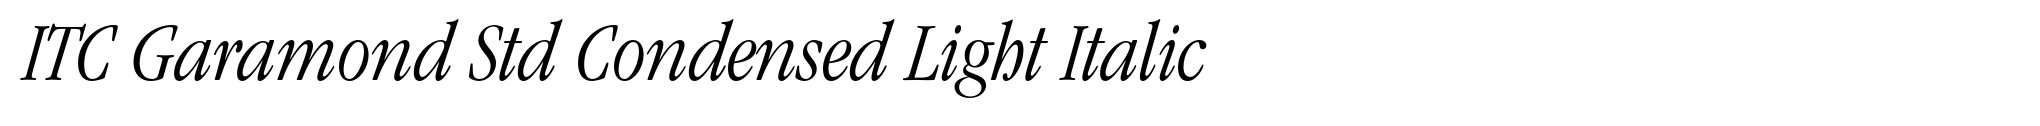 ITC Garamond Std Condensed Light Italic image